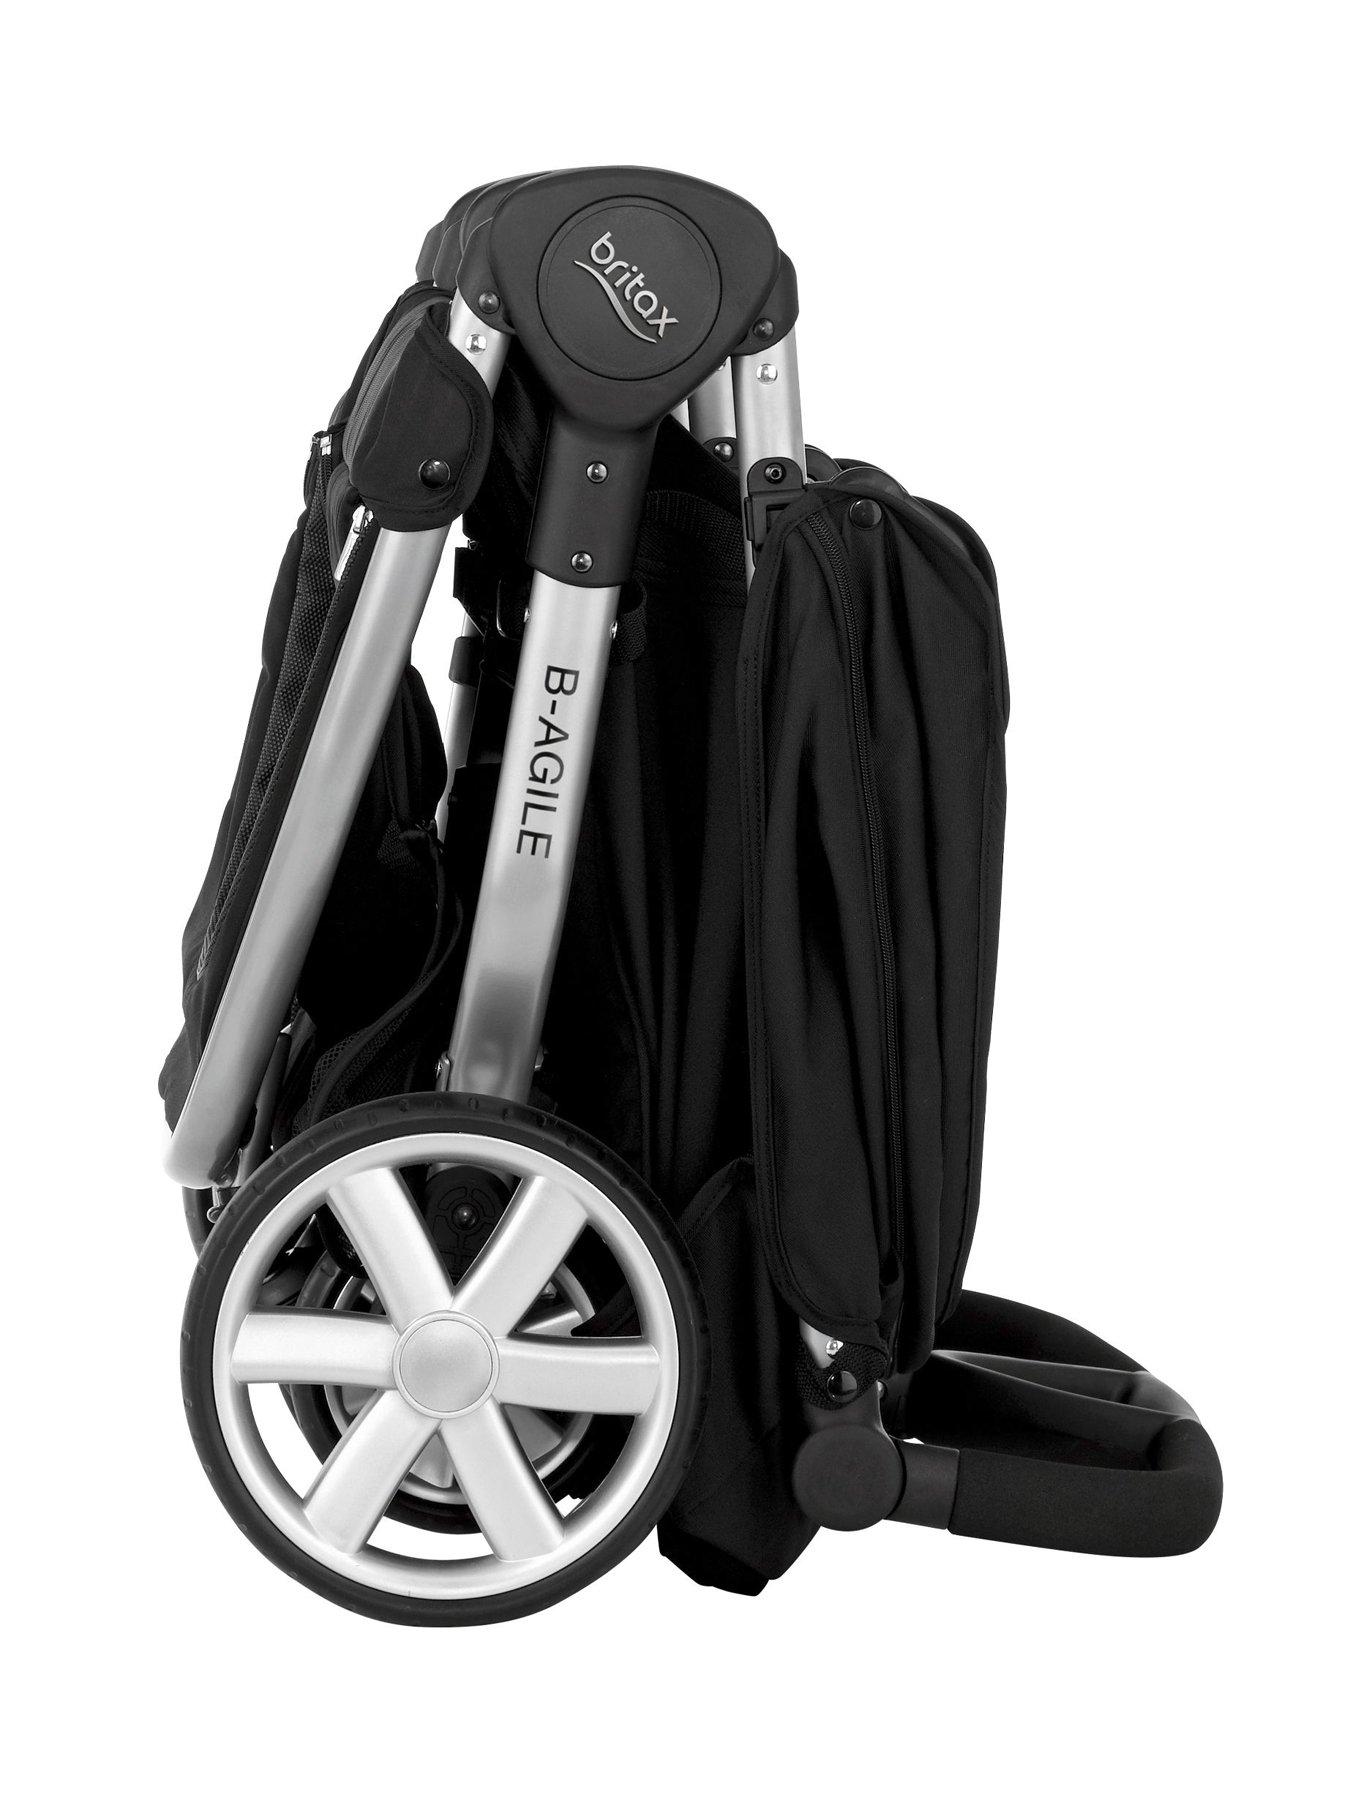 britax b agile double stroller dimensions